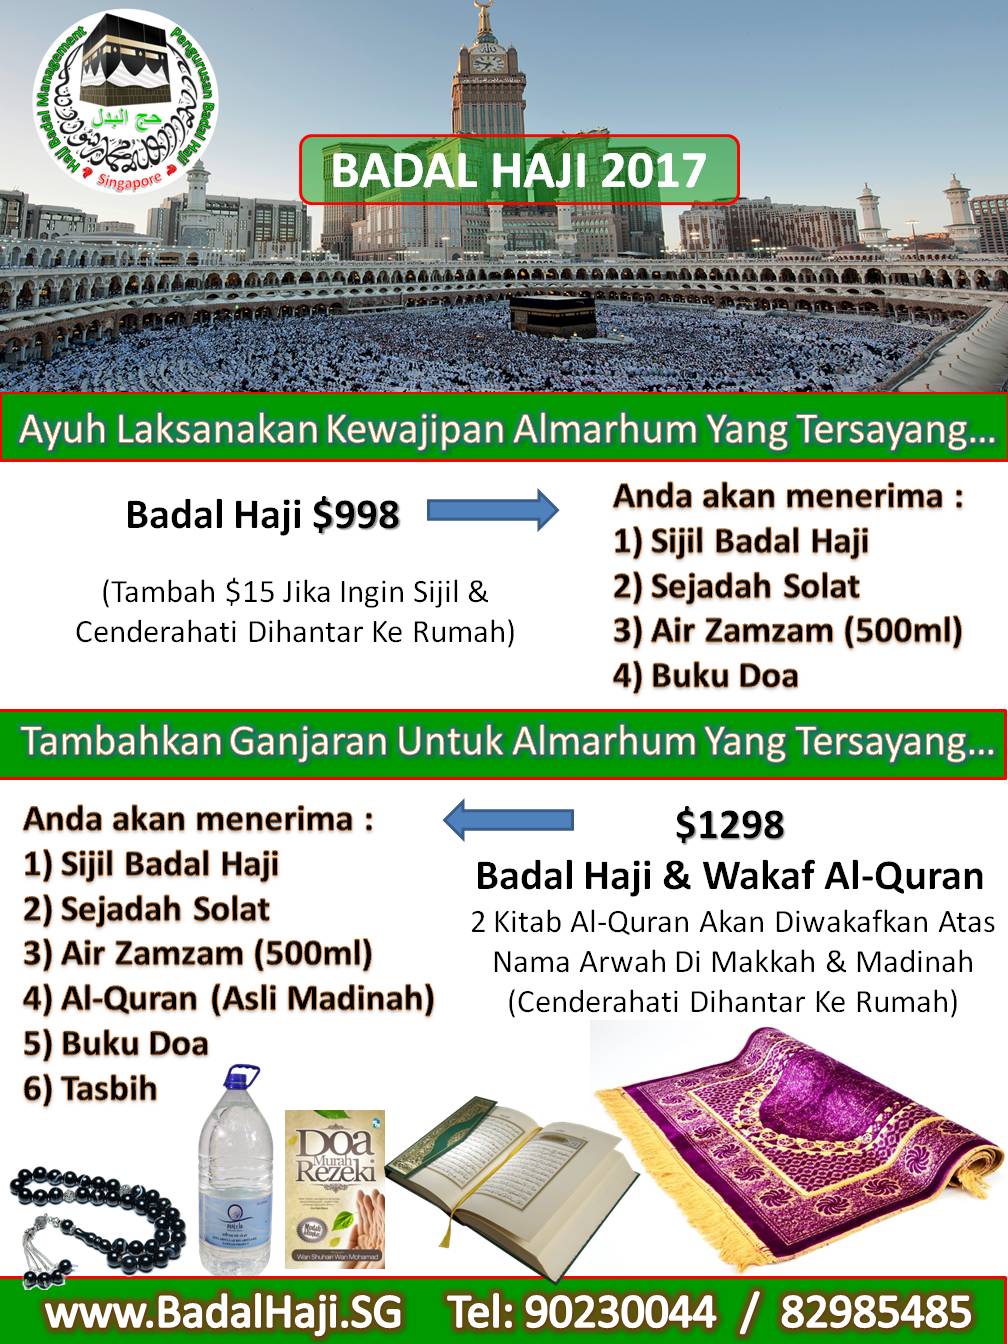 Badal Haji 2018  Korban / Qurban Singapore